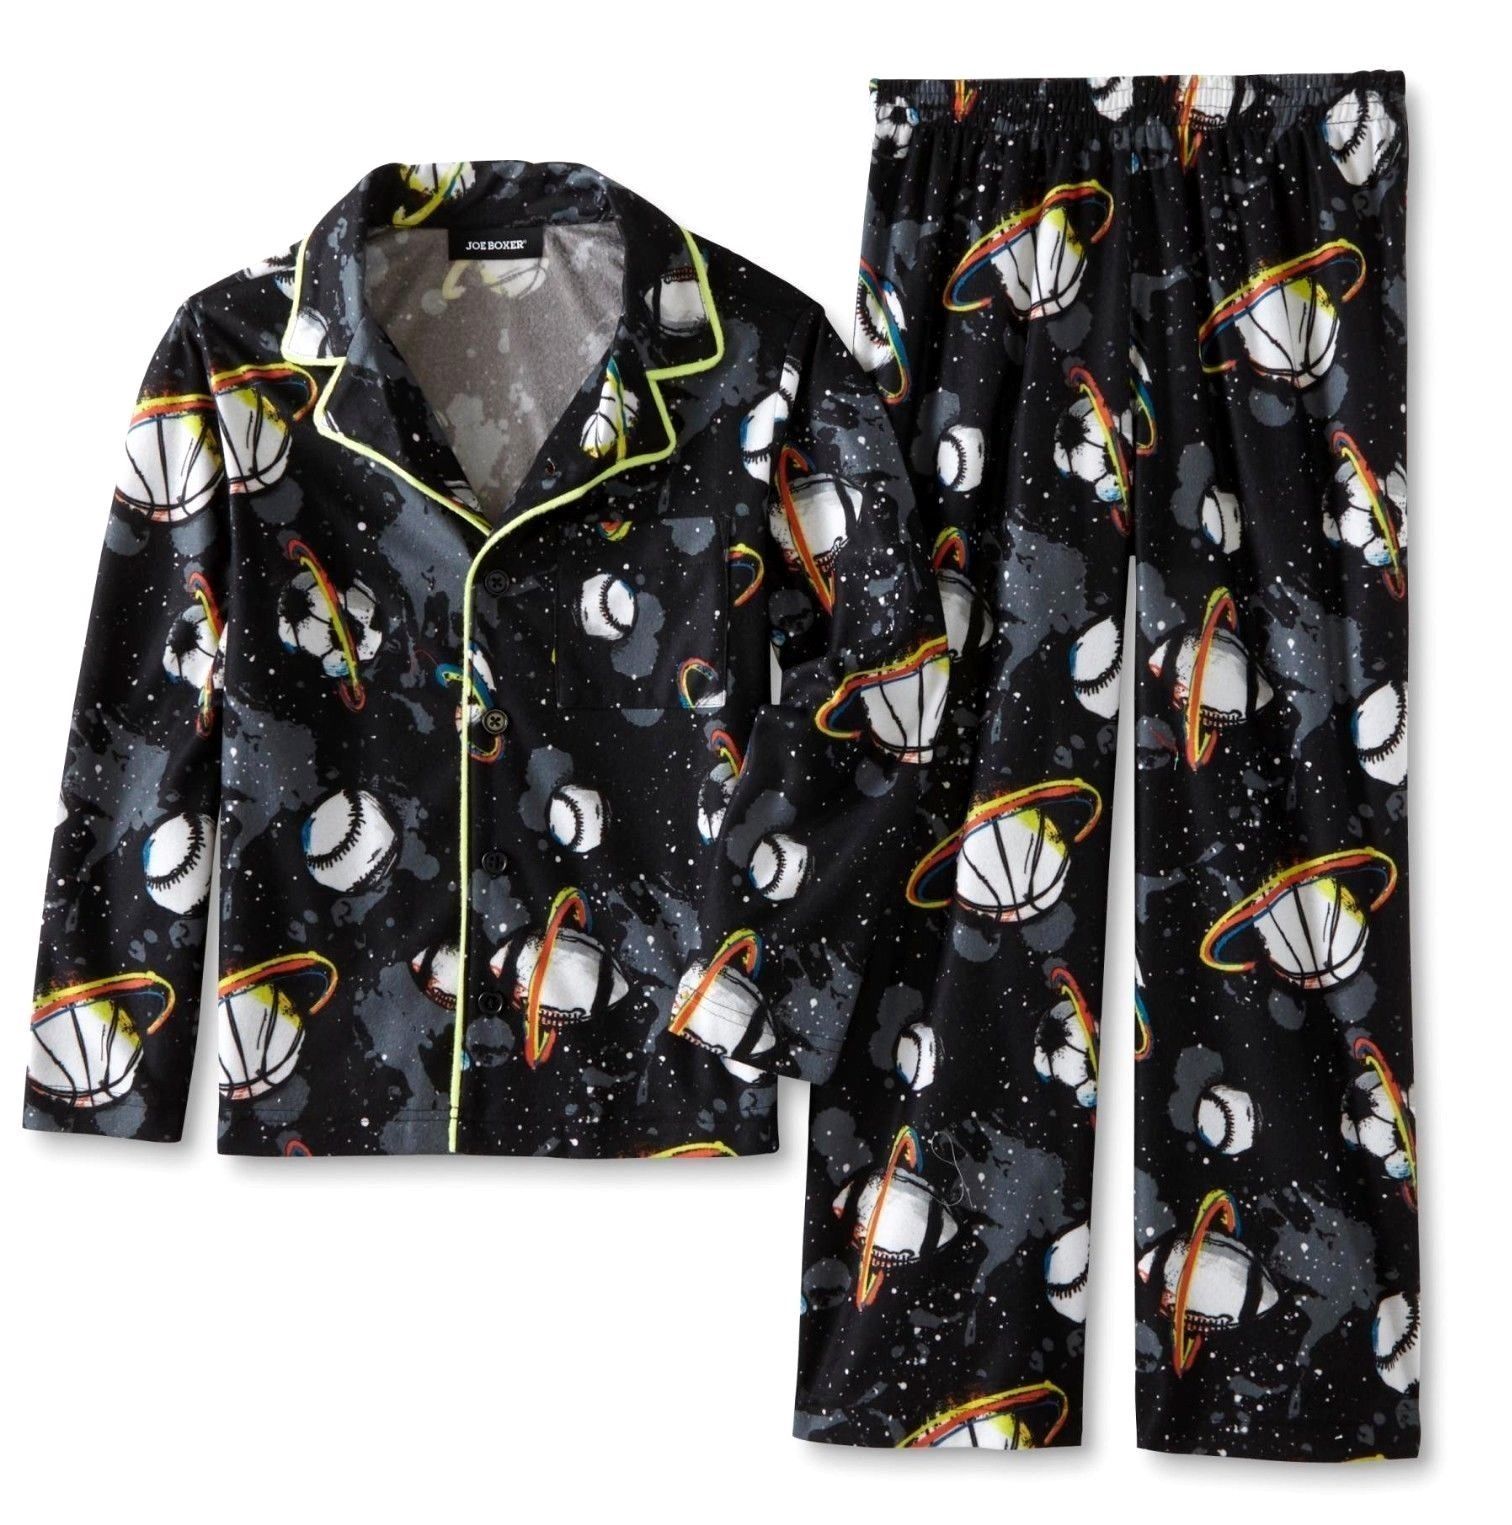 Primary image for Joe Boxer Boys Planet Sports Pajamas 6 7 Top Pants Flannel Black Space Sleep S